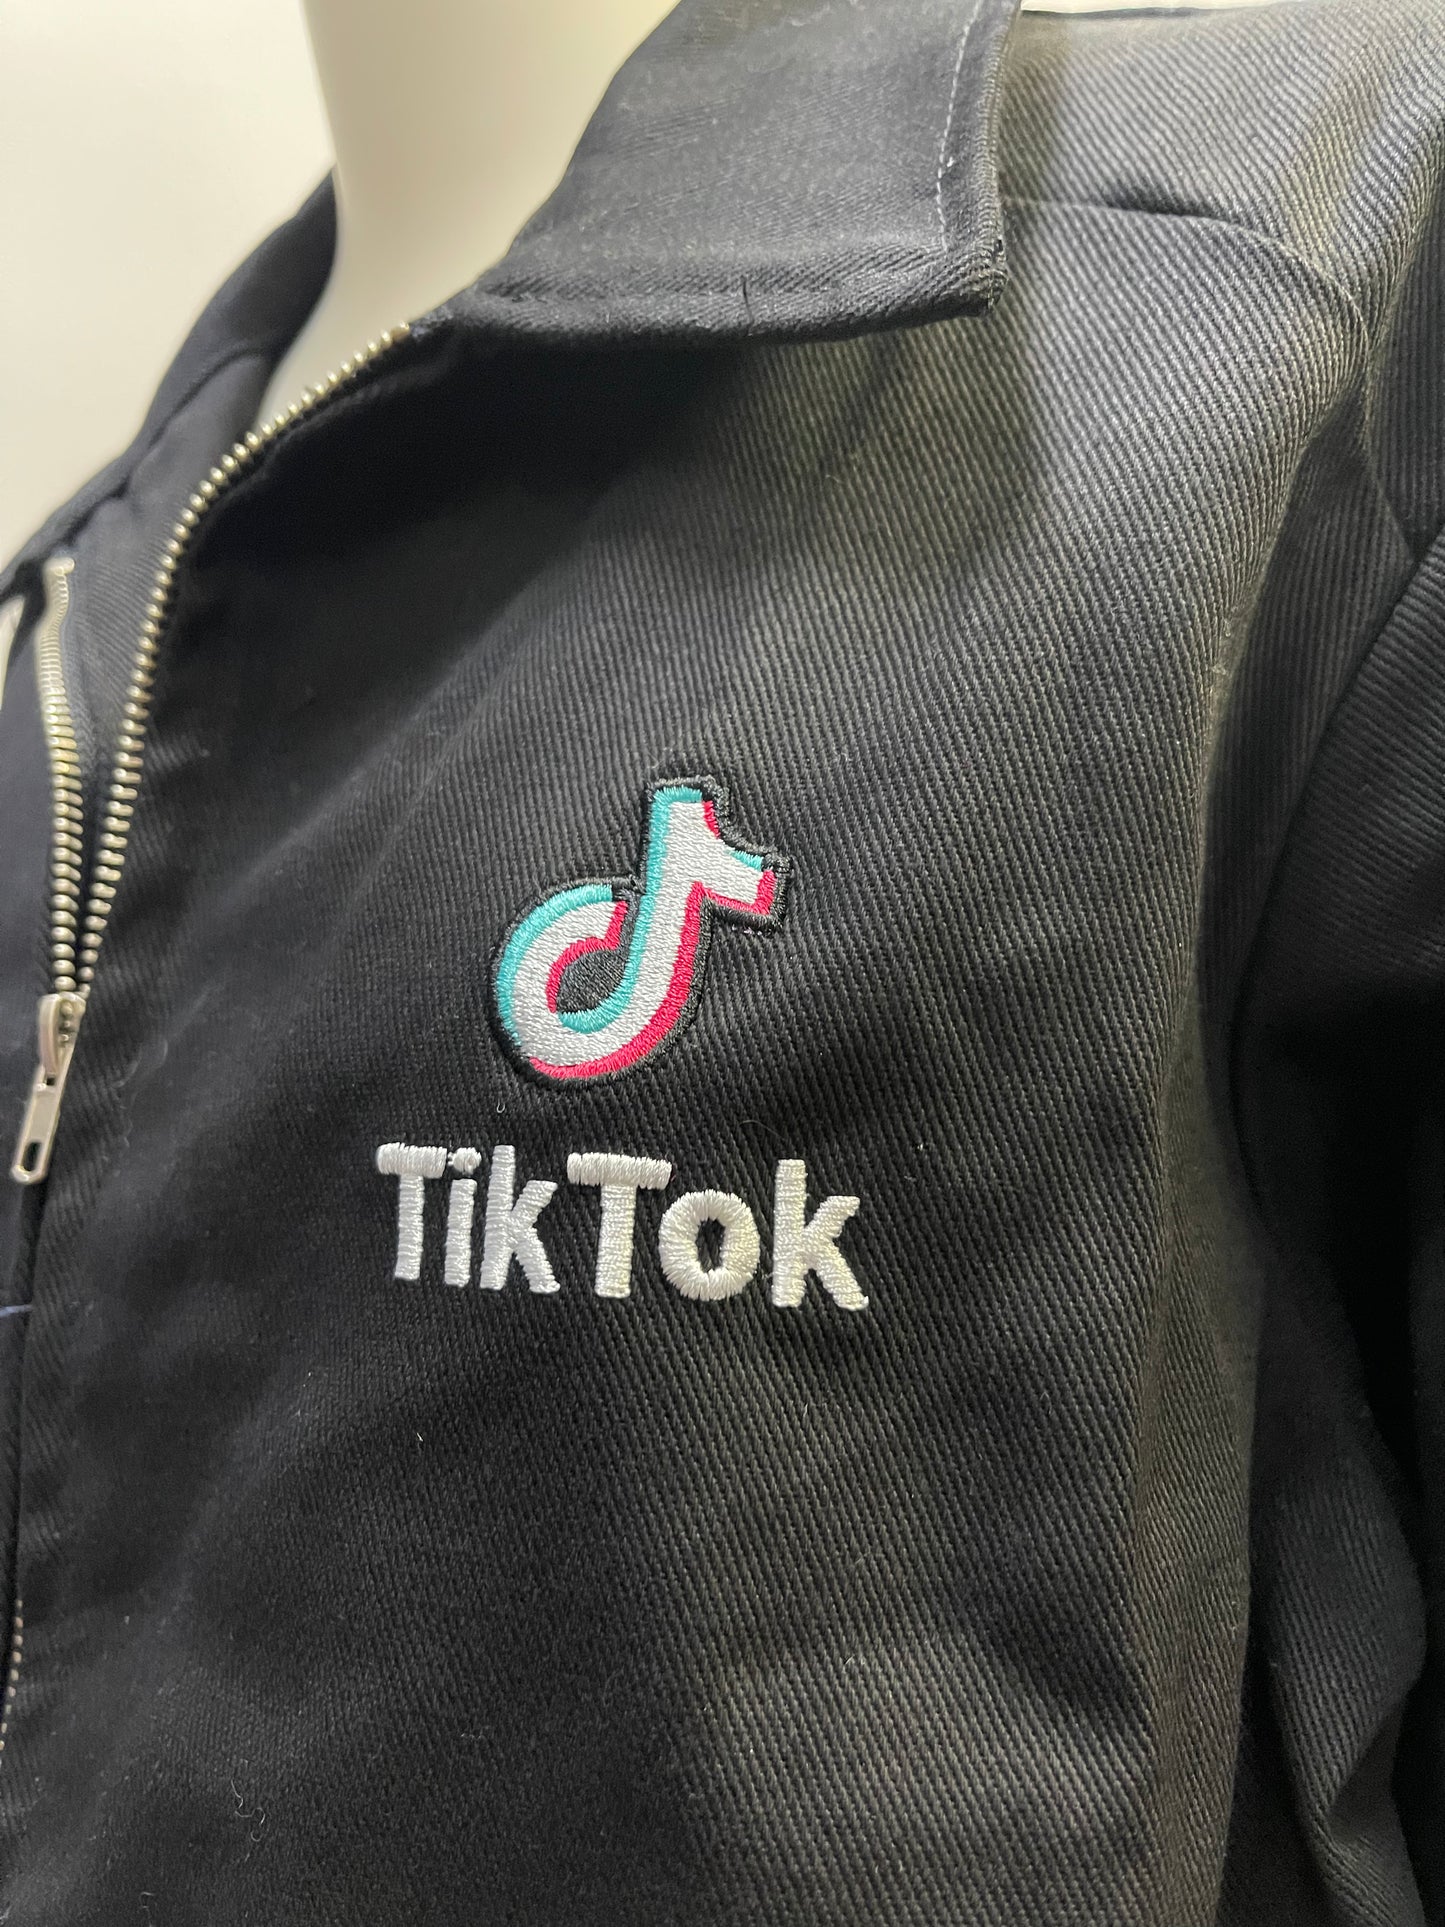 TikTok Official Employee Black Jacket (Size M)